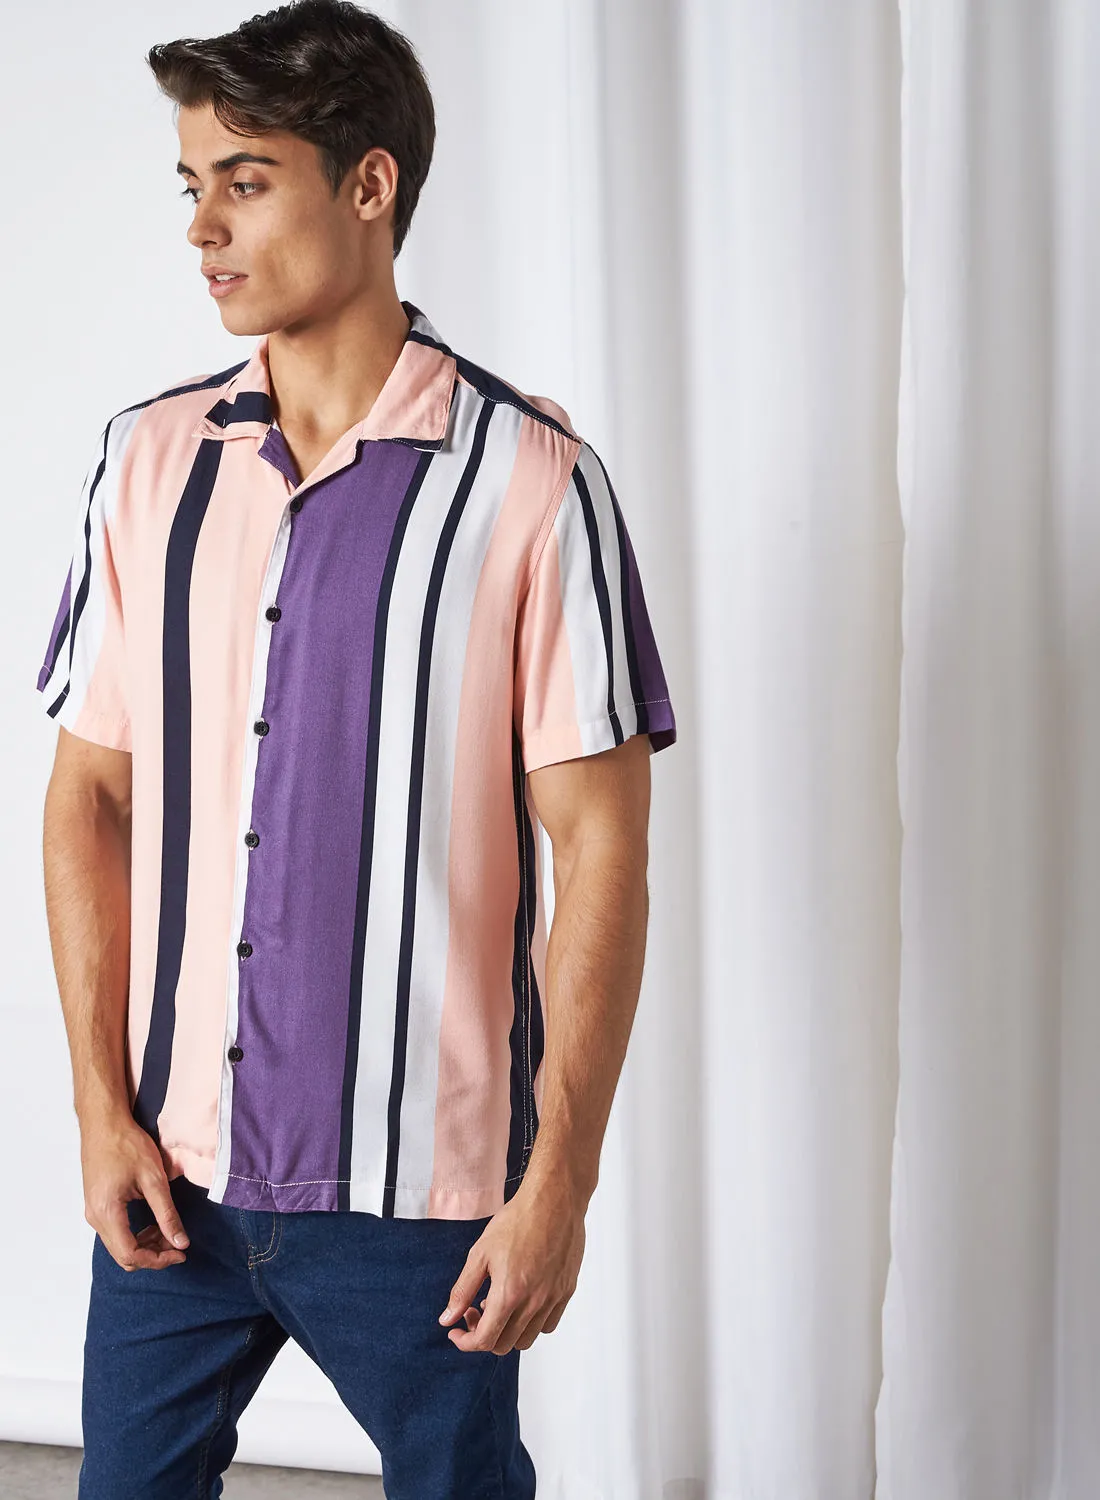 Blue Saint Striped Short Sleeve Shirt Pink & Purple